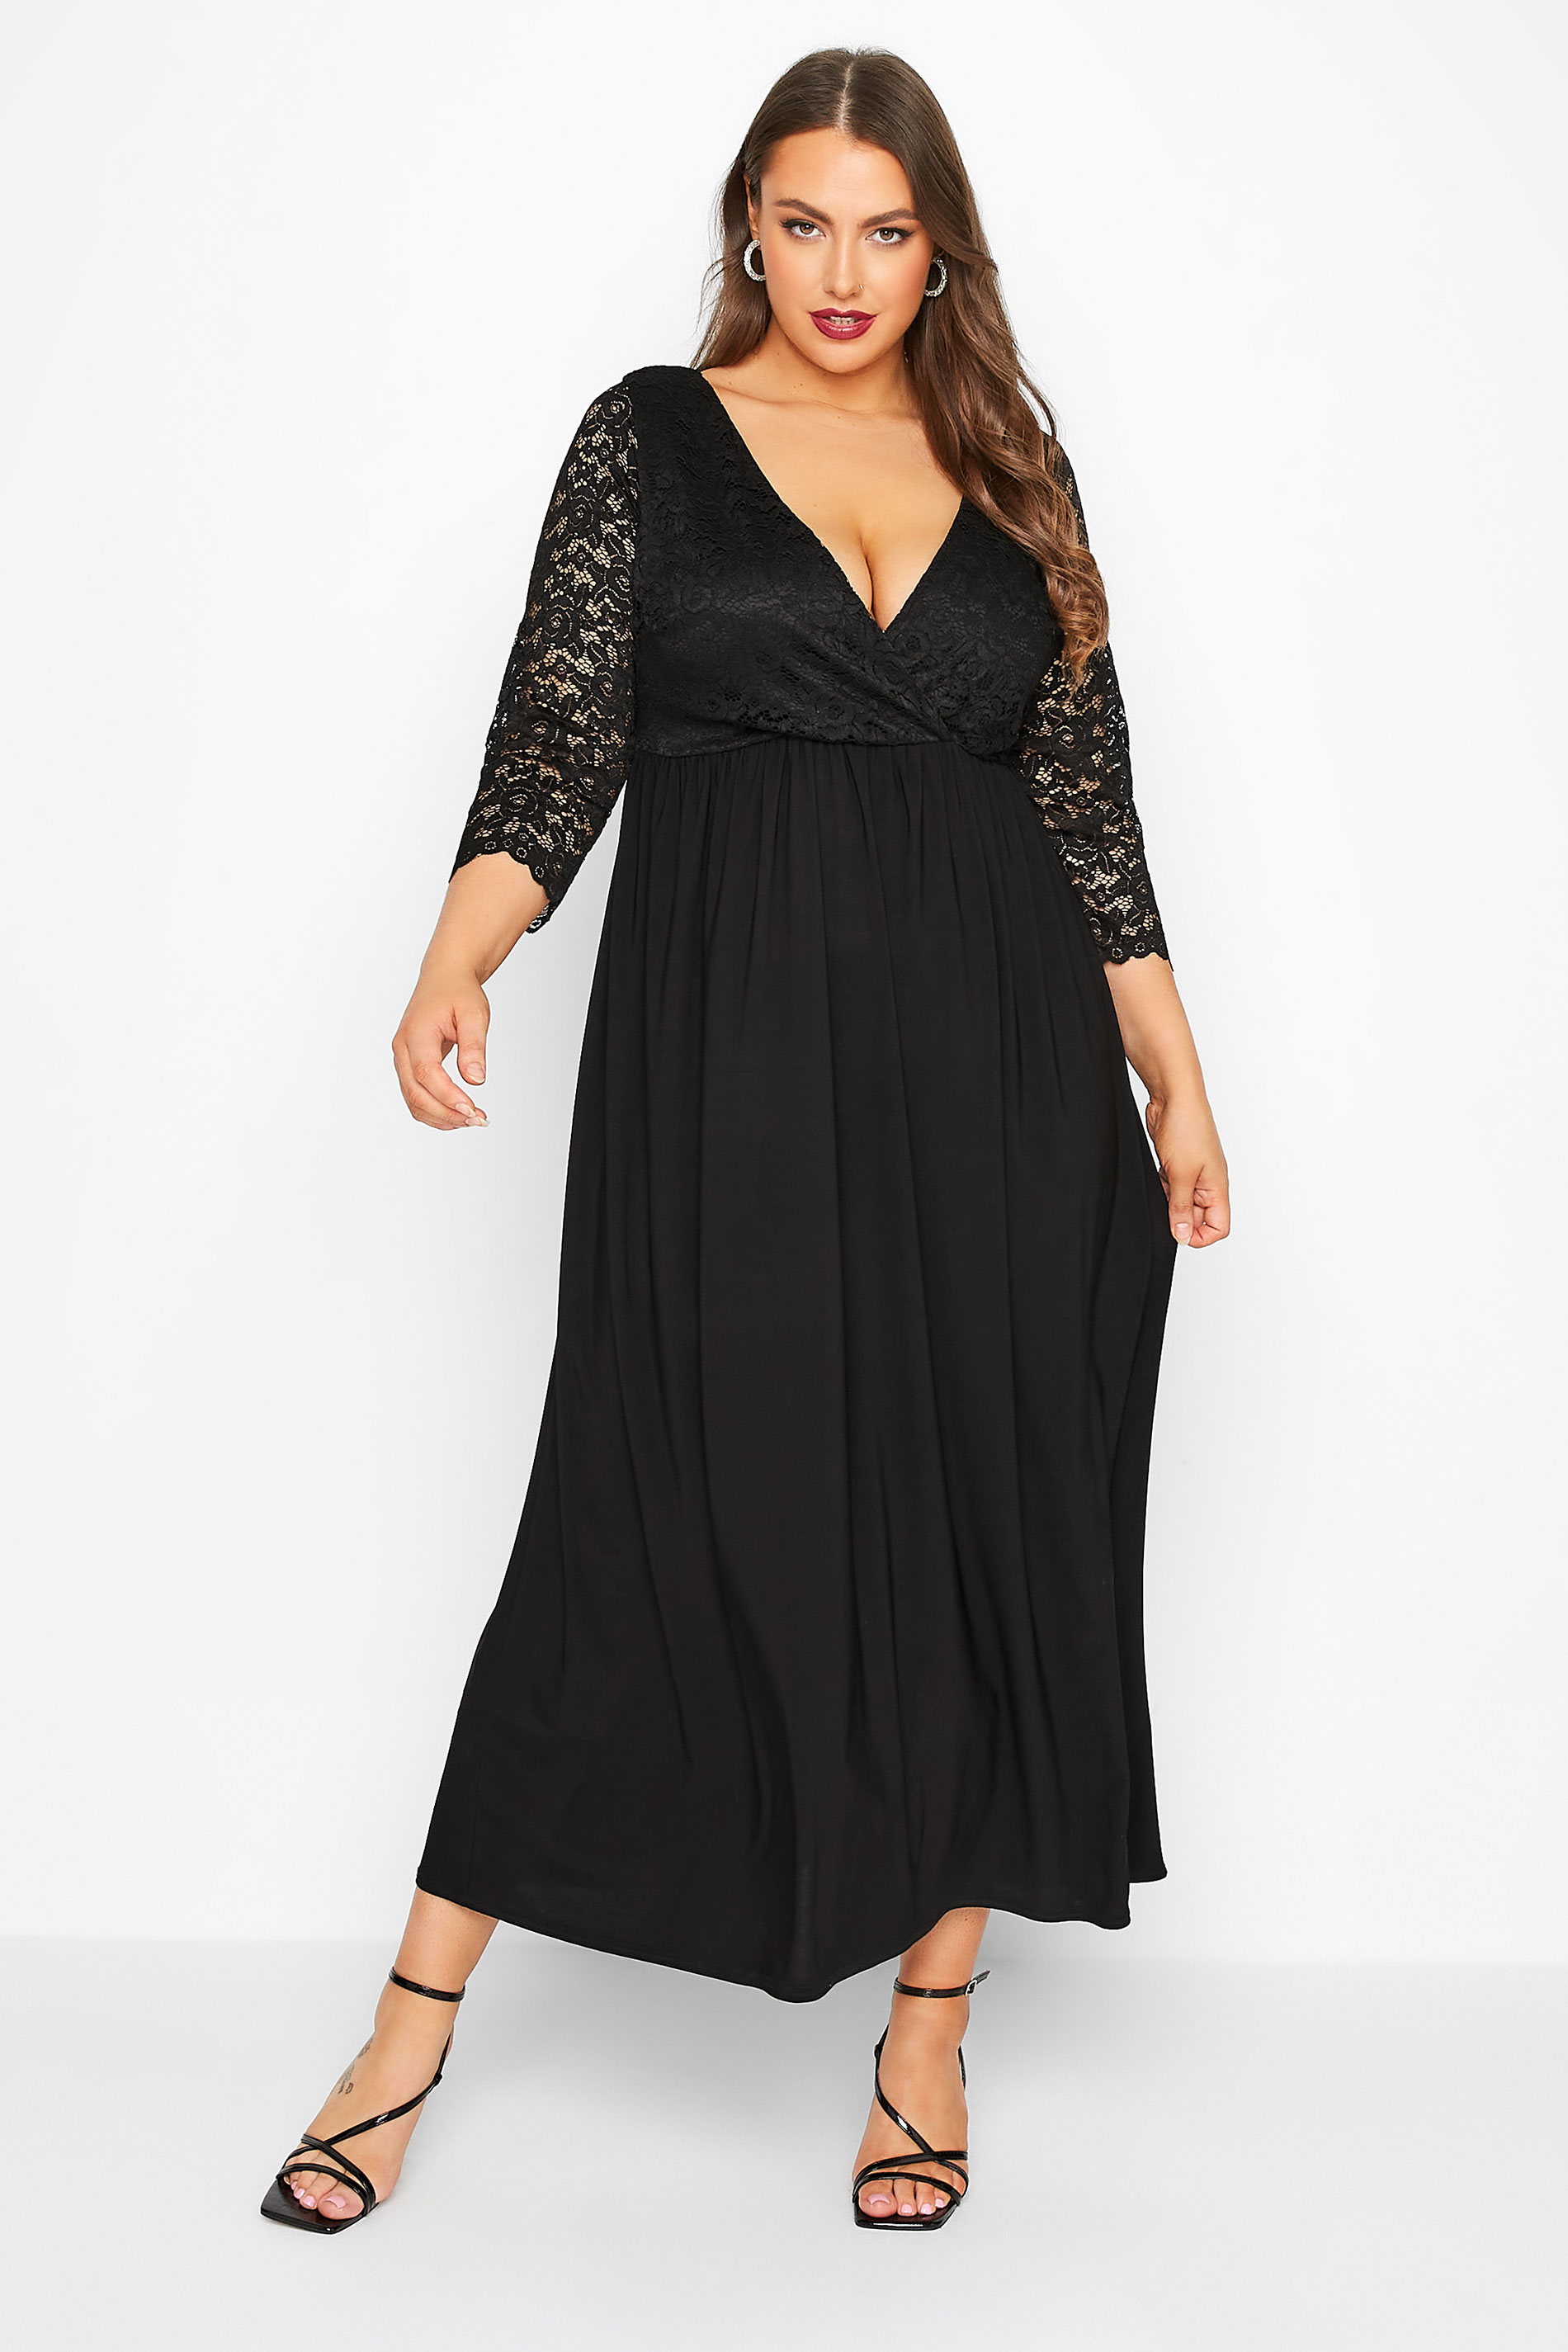 YOURS LONDON Plus Size Black Lace Wrap Maxi Dress | Yours Clothing 2